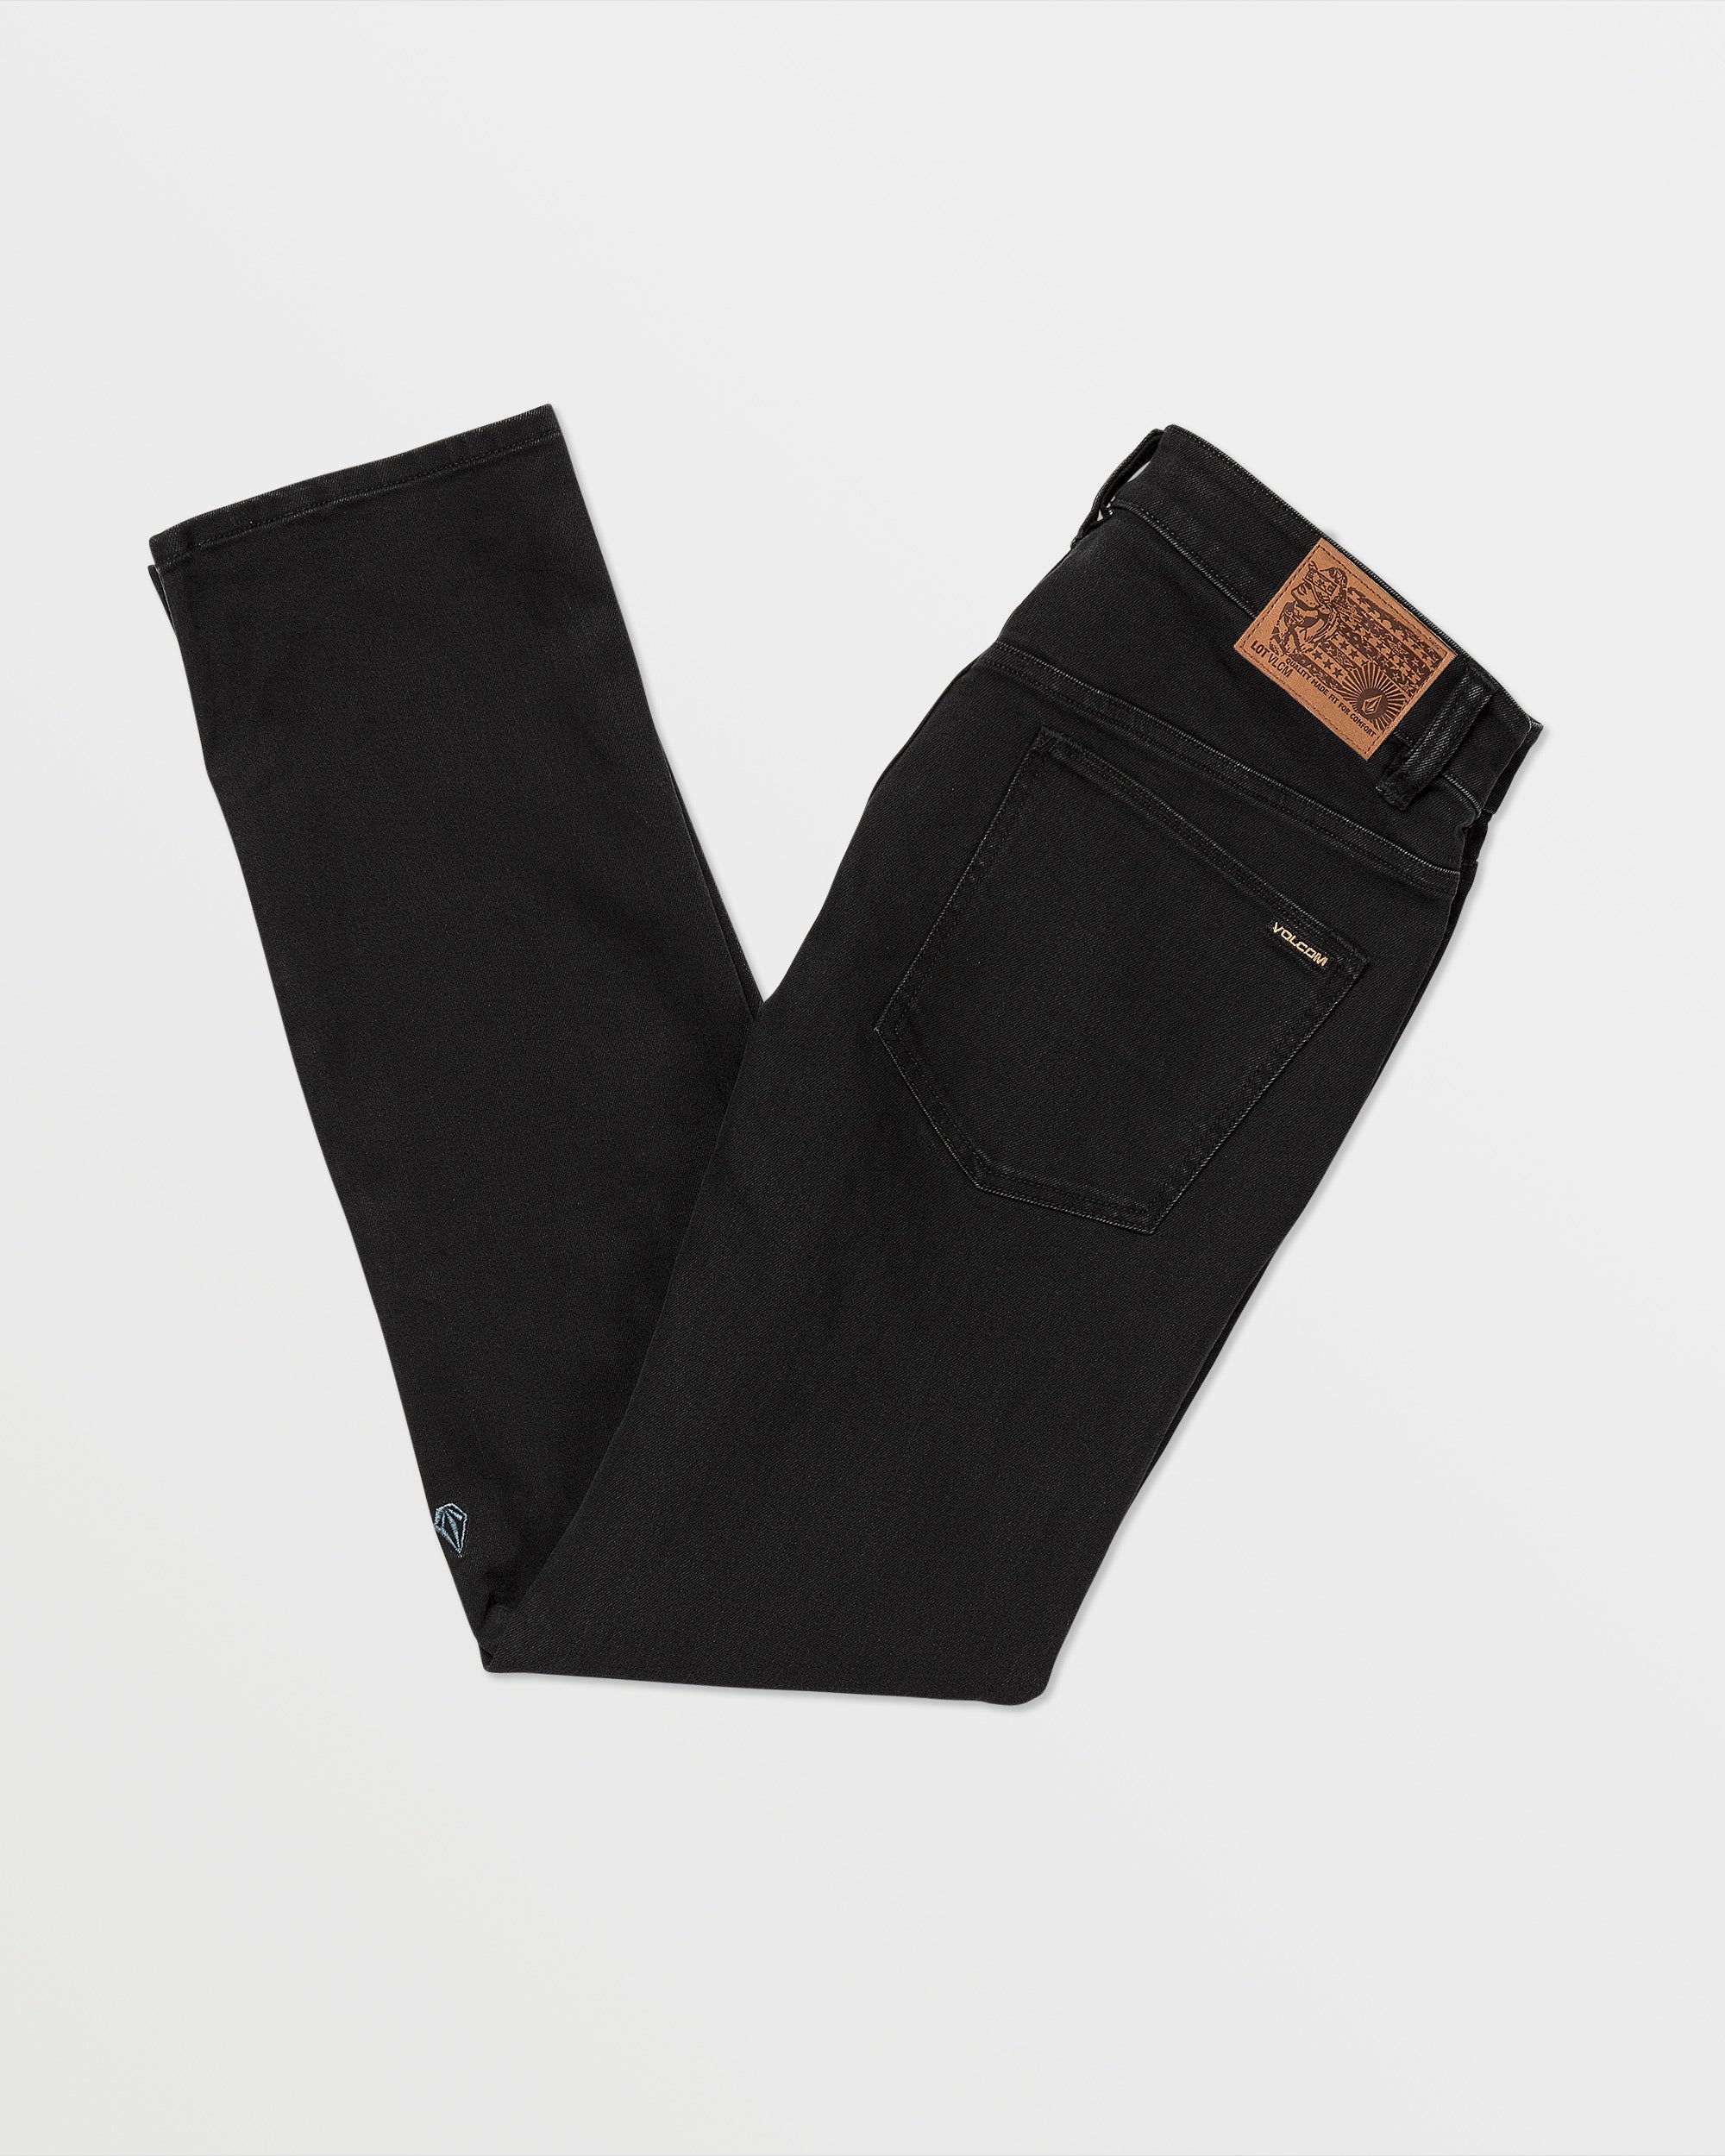 Jeans Black Modern - Fit US – Out Volcom Solver